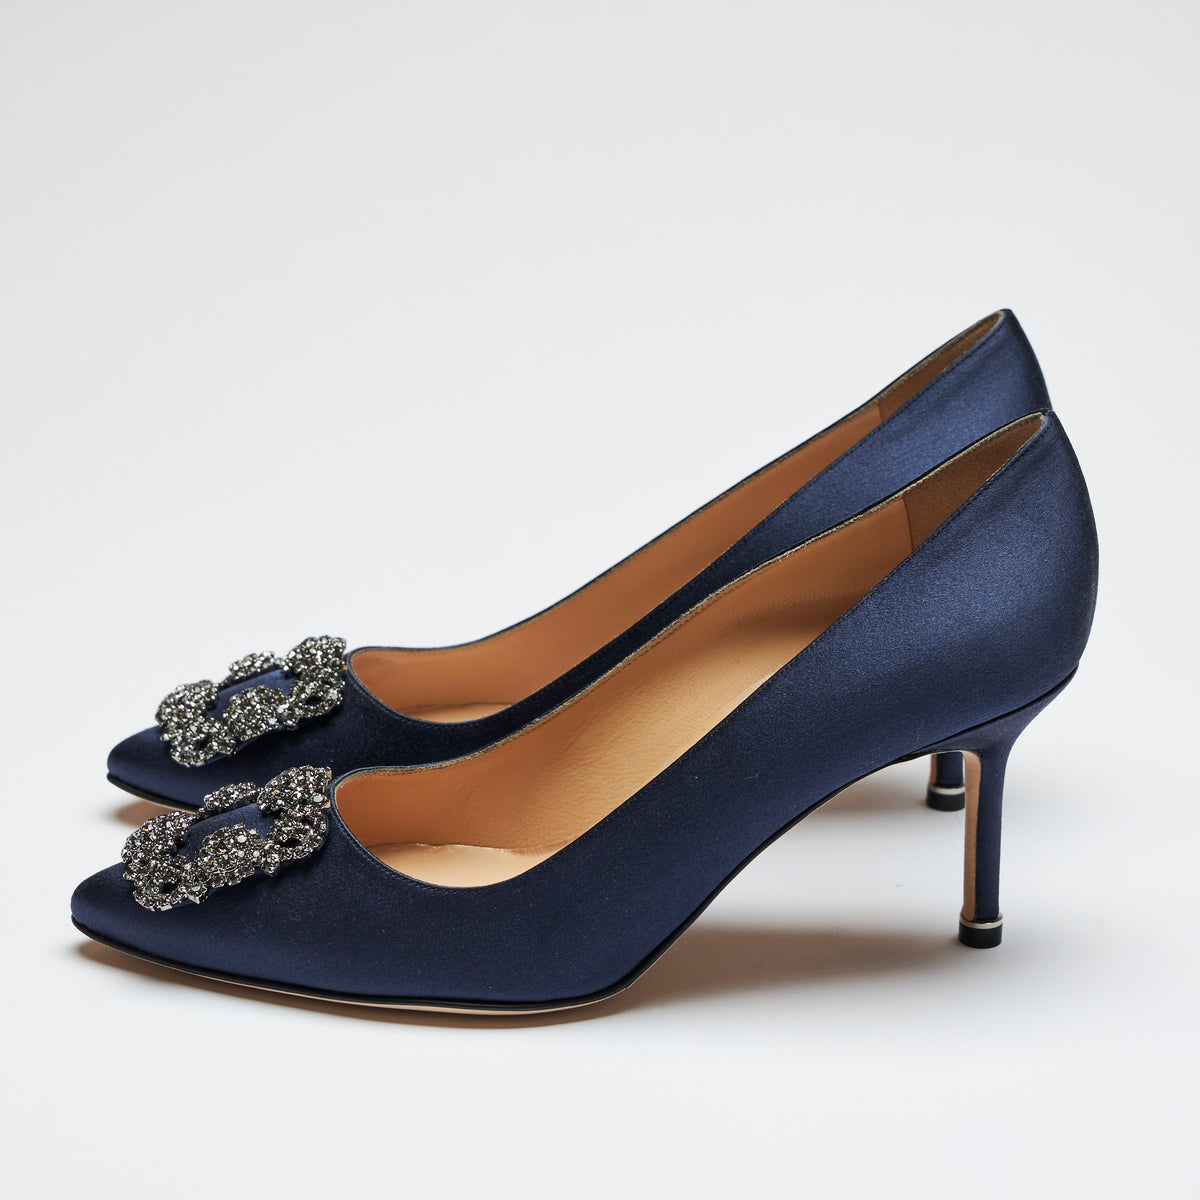 navy blue satin heels with dark grey crystal buckle ornament (side view)